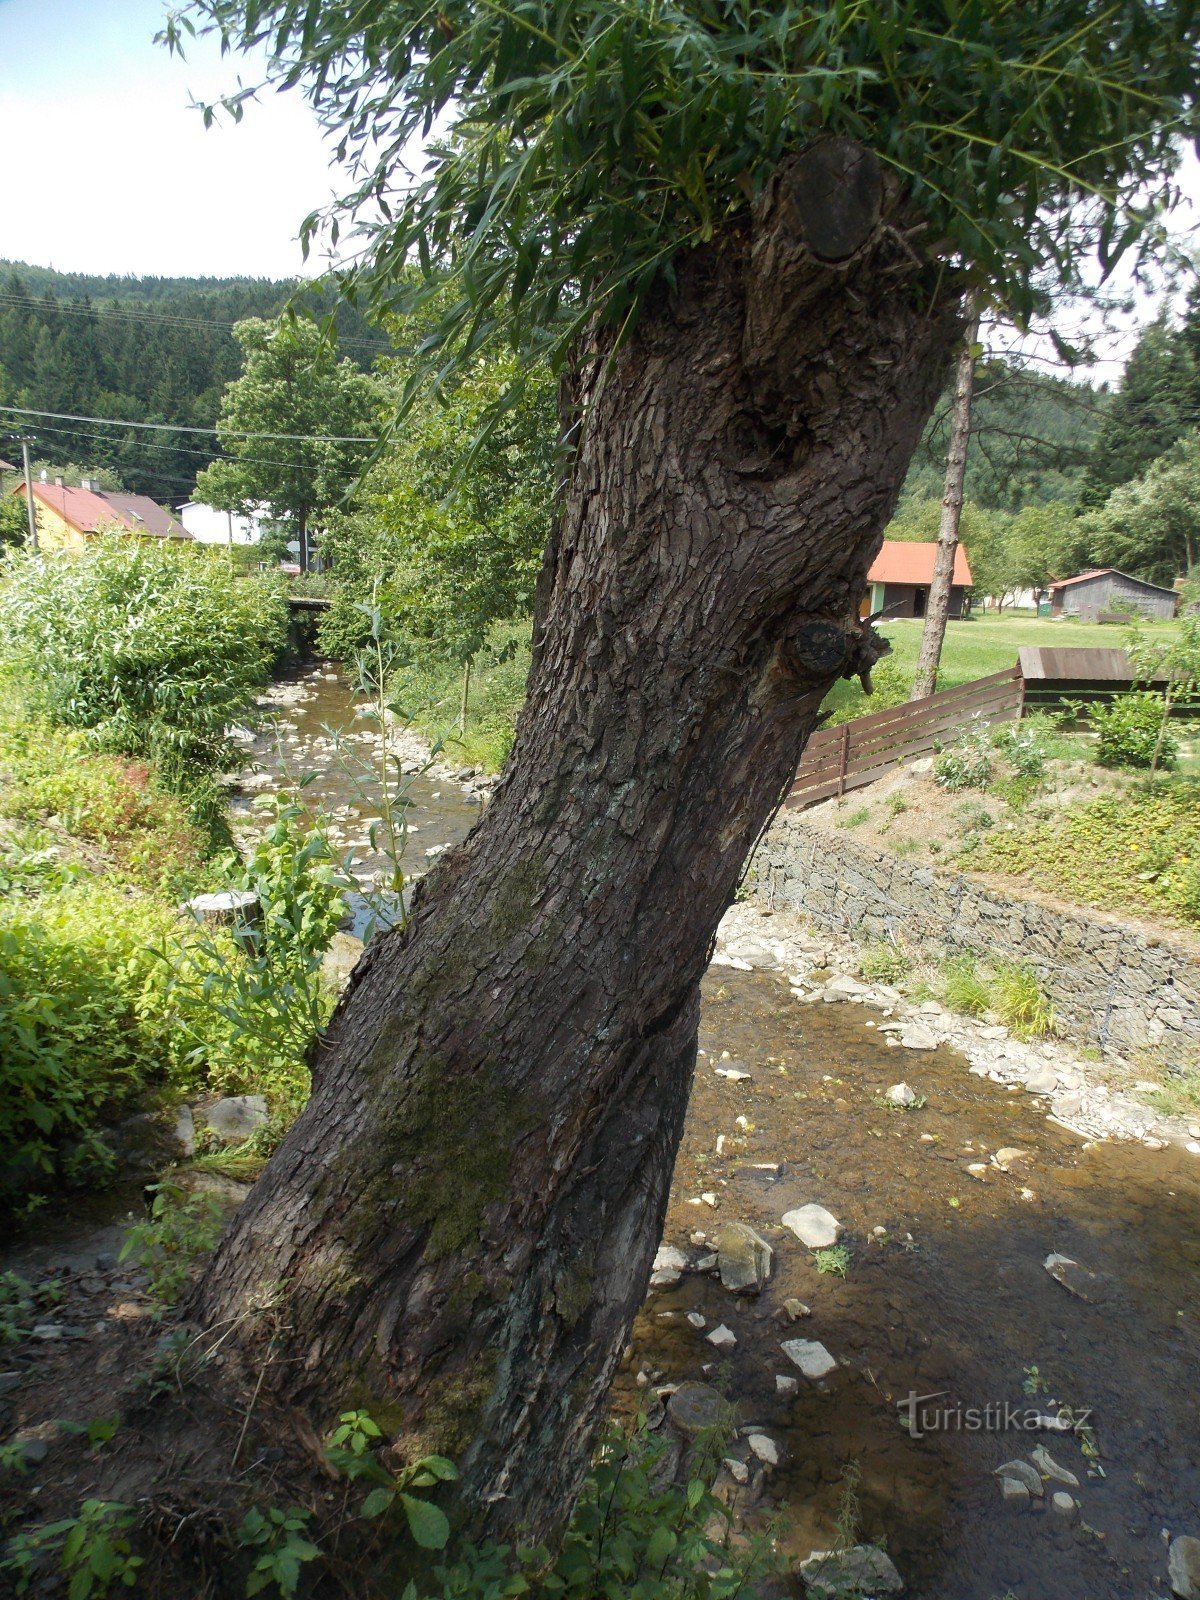 Recreational place - Rajnochovice village